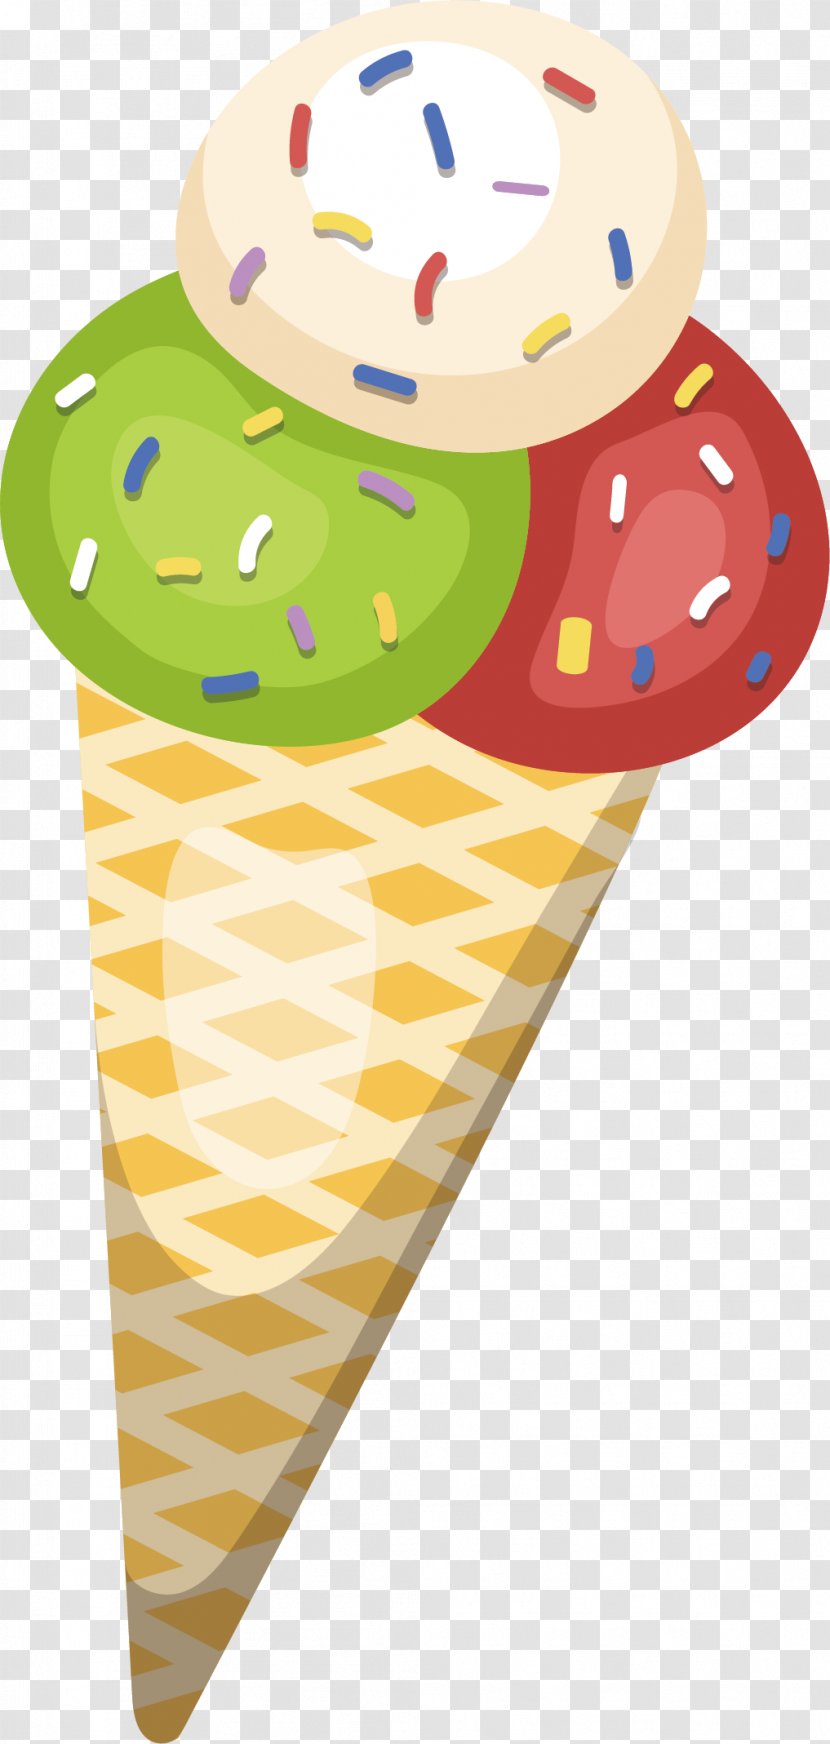 Ice Cream Cone Illustration - Vector Transparent PNG